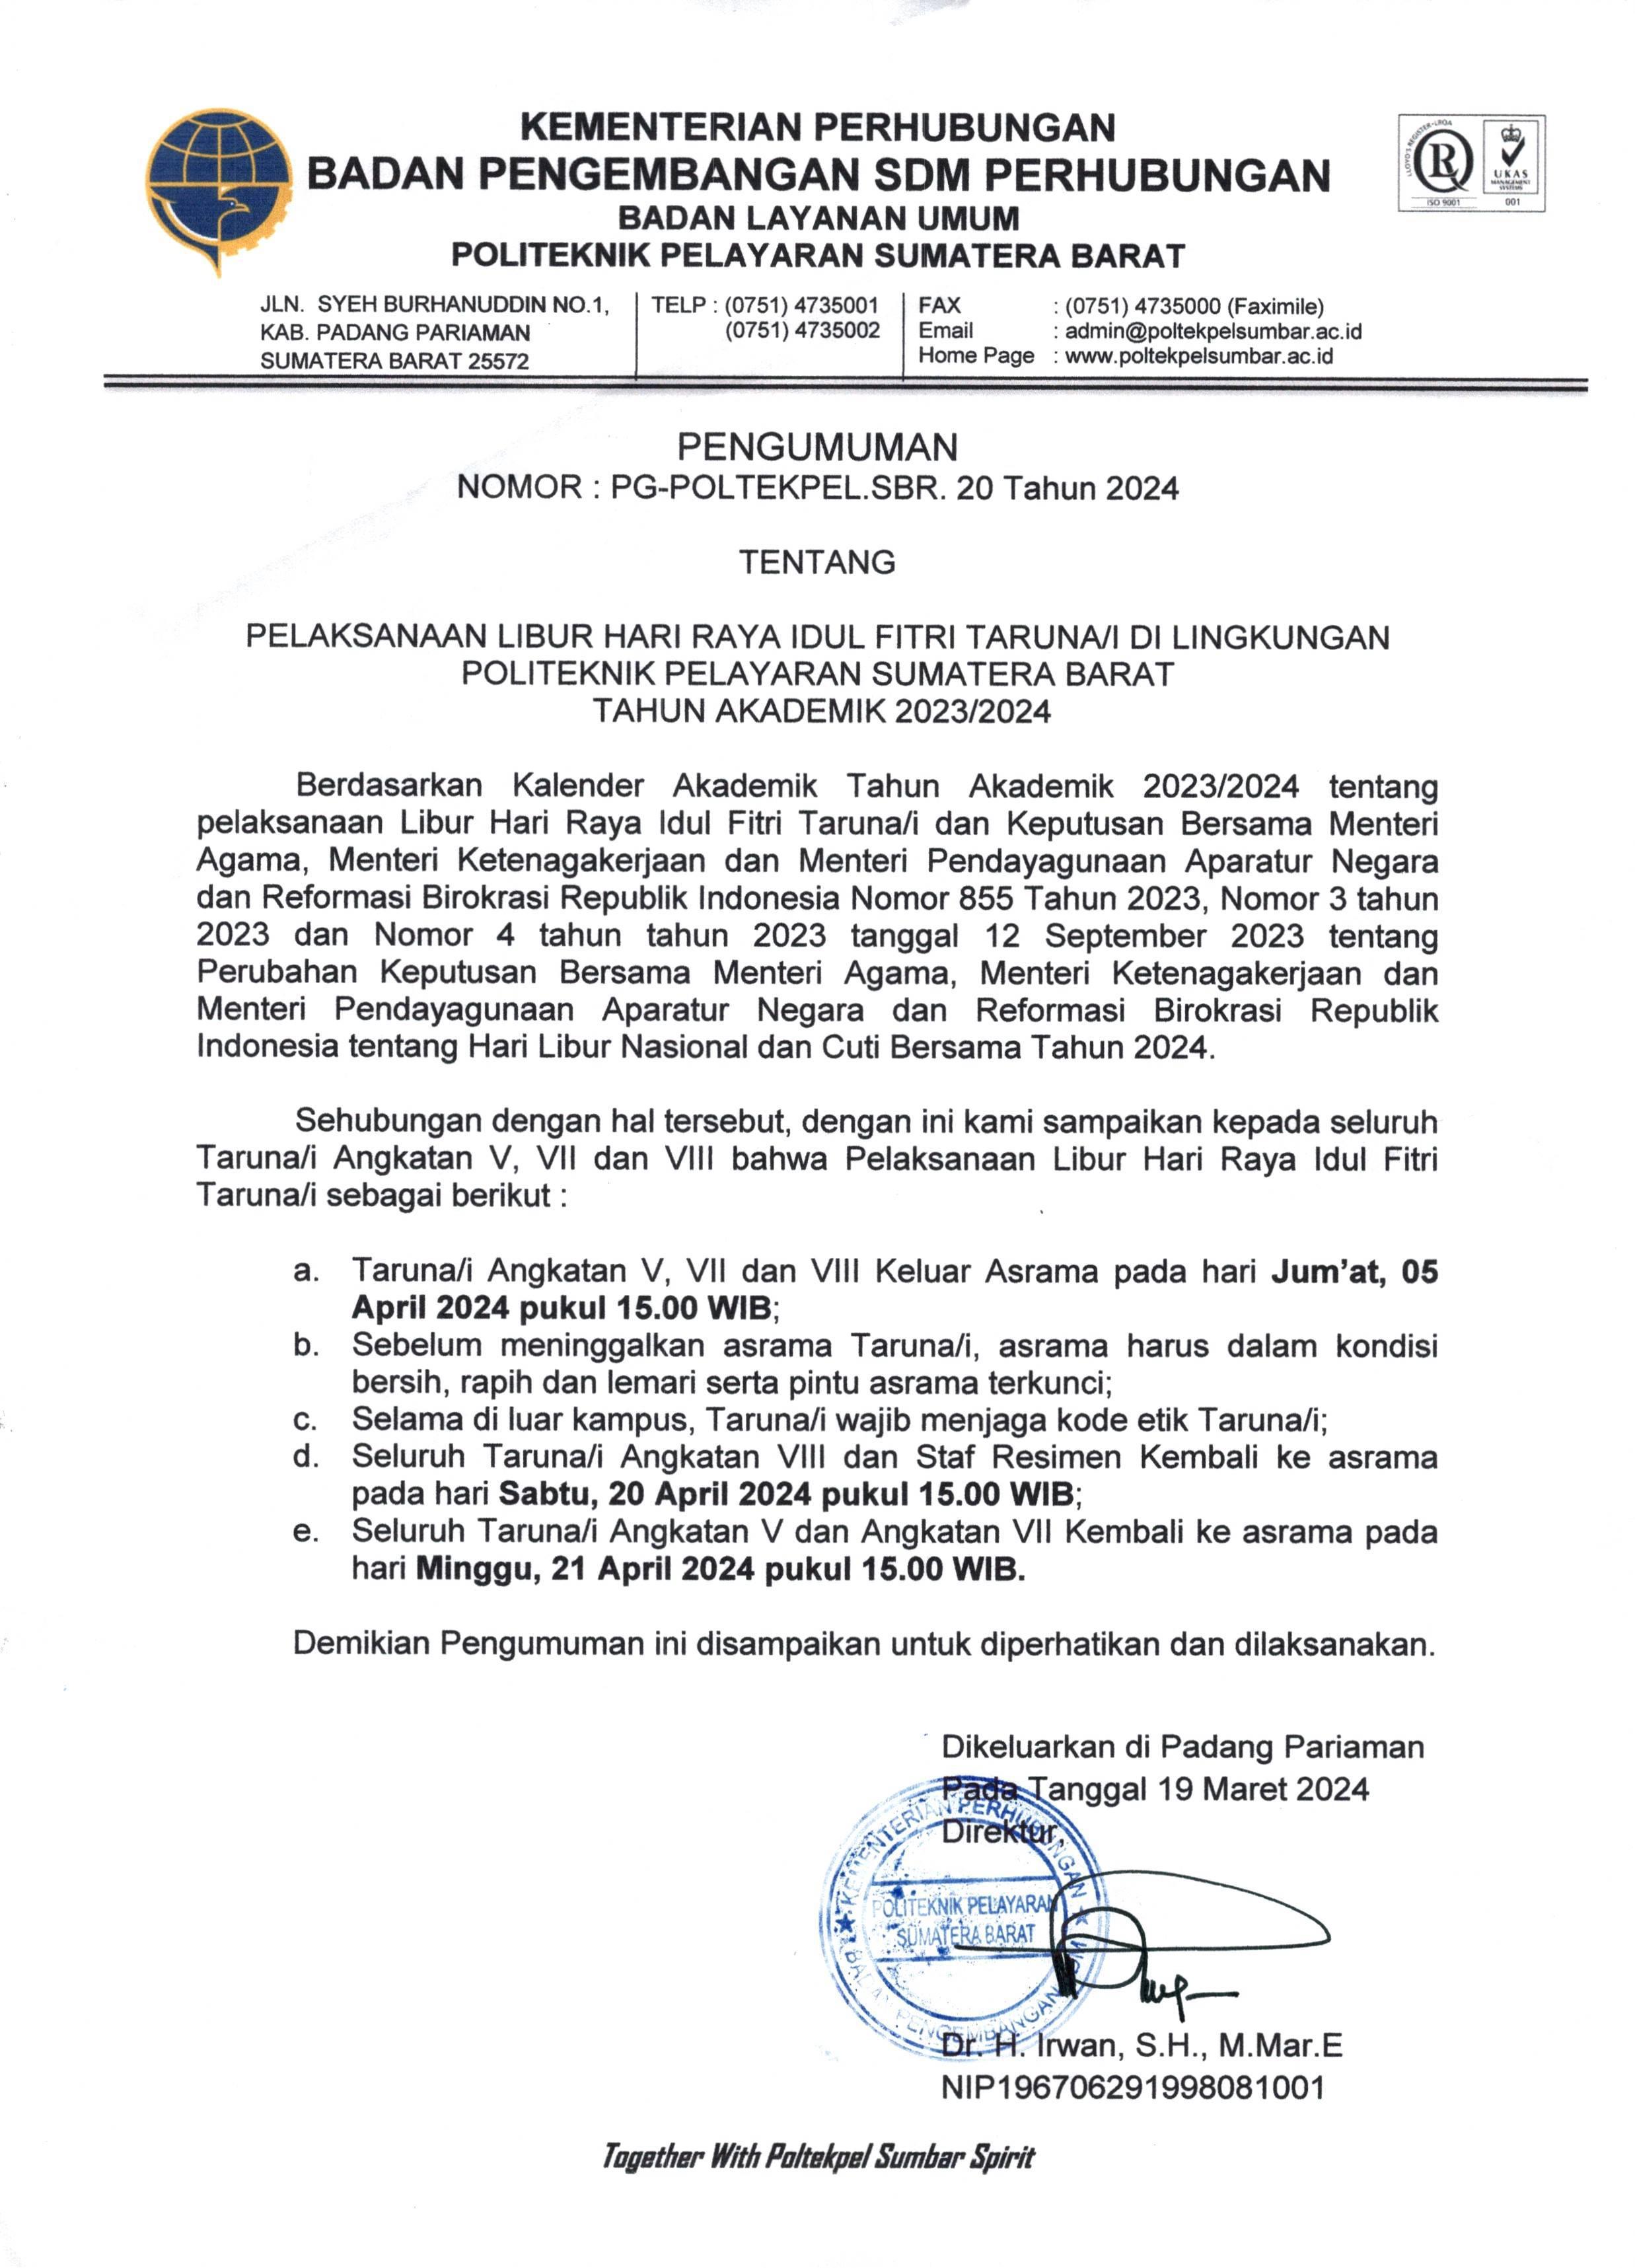 Pengumuman Hari Libur Hari Raya Idul Fitri Taruna/I di Lingkungan Politeknik Pelayaran Sumatera Barat Tahun Akademik 2023/2023